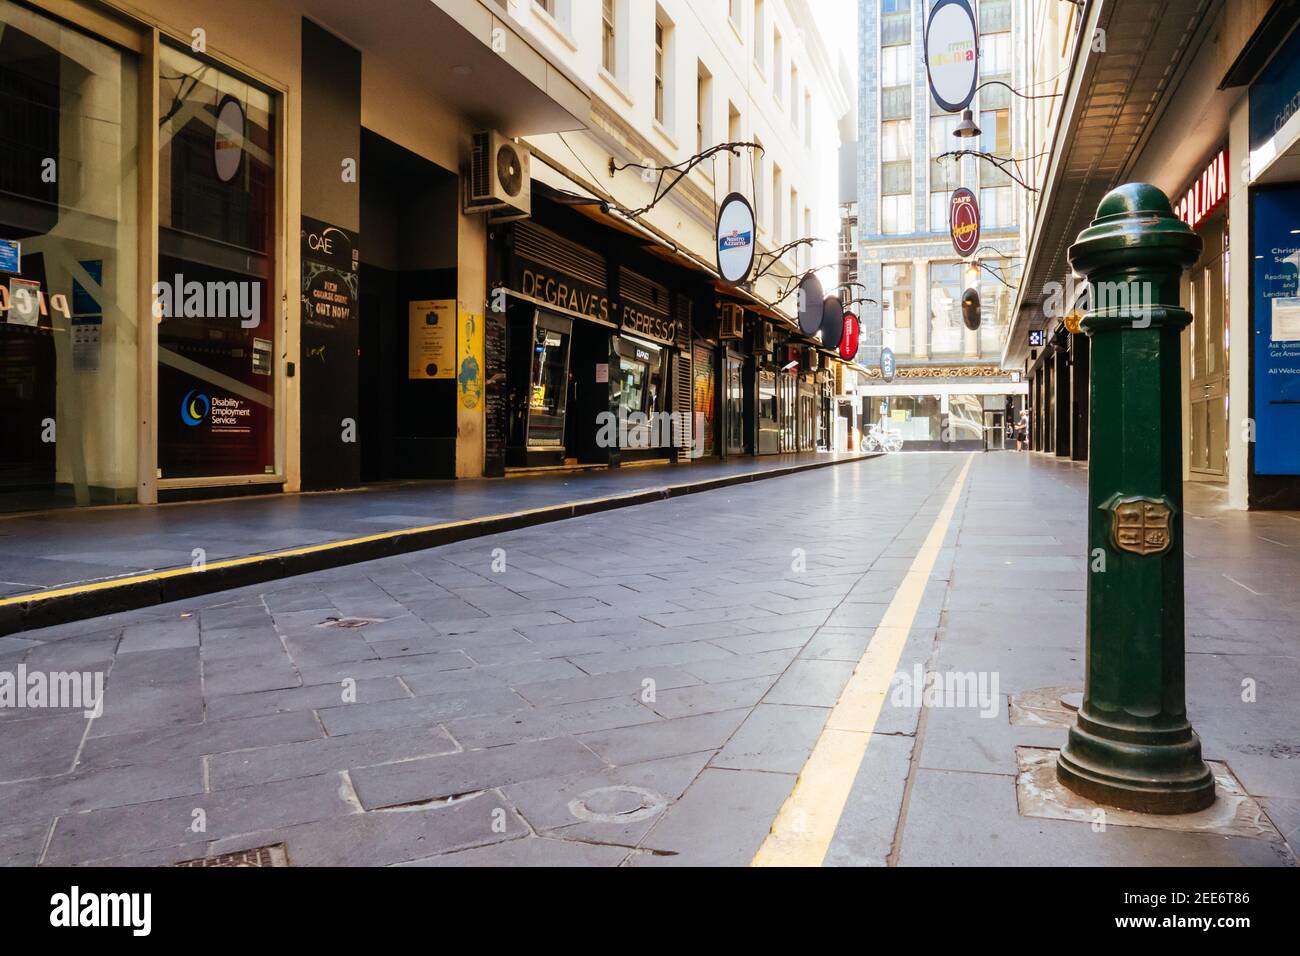 Melbourne in Lockdown During Coronavirus Pandemic Stock Photo